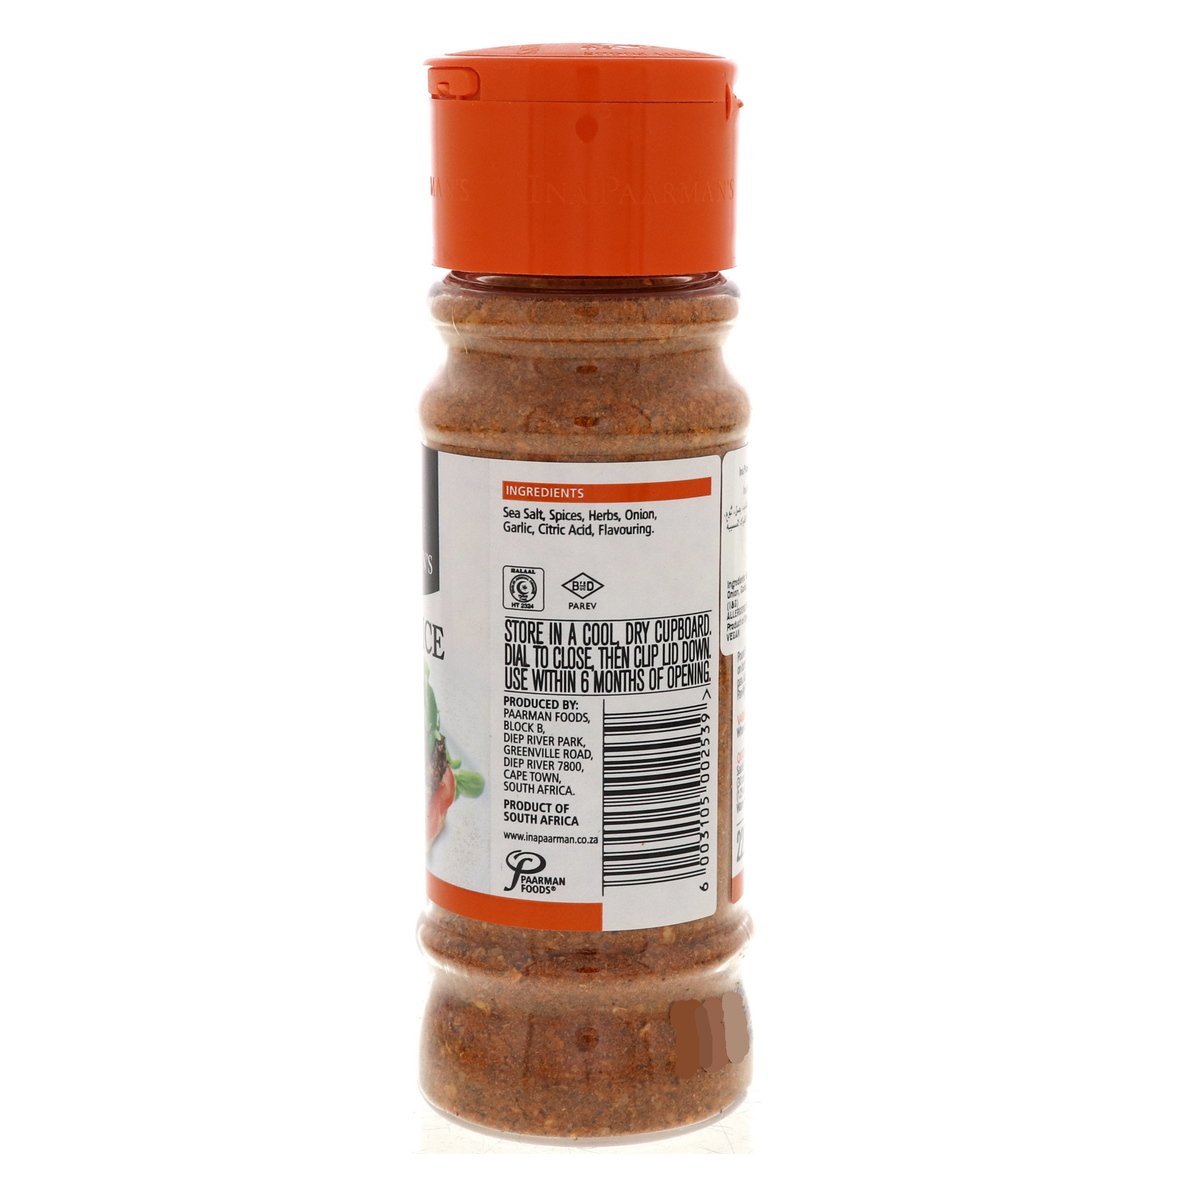 Ina Paarman's Cajun Spice 200 ml